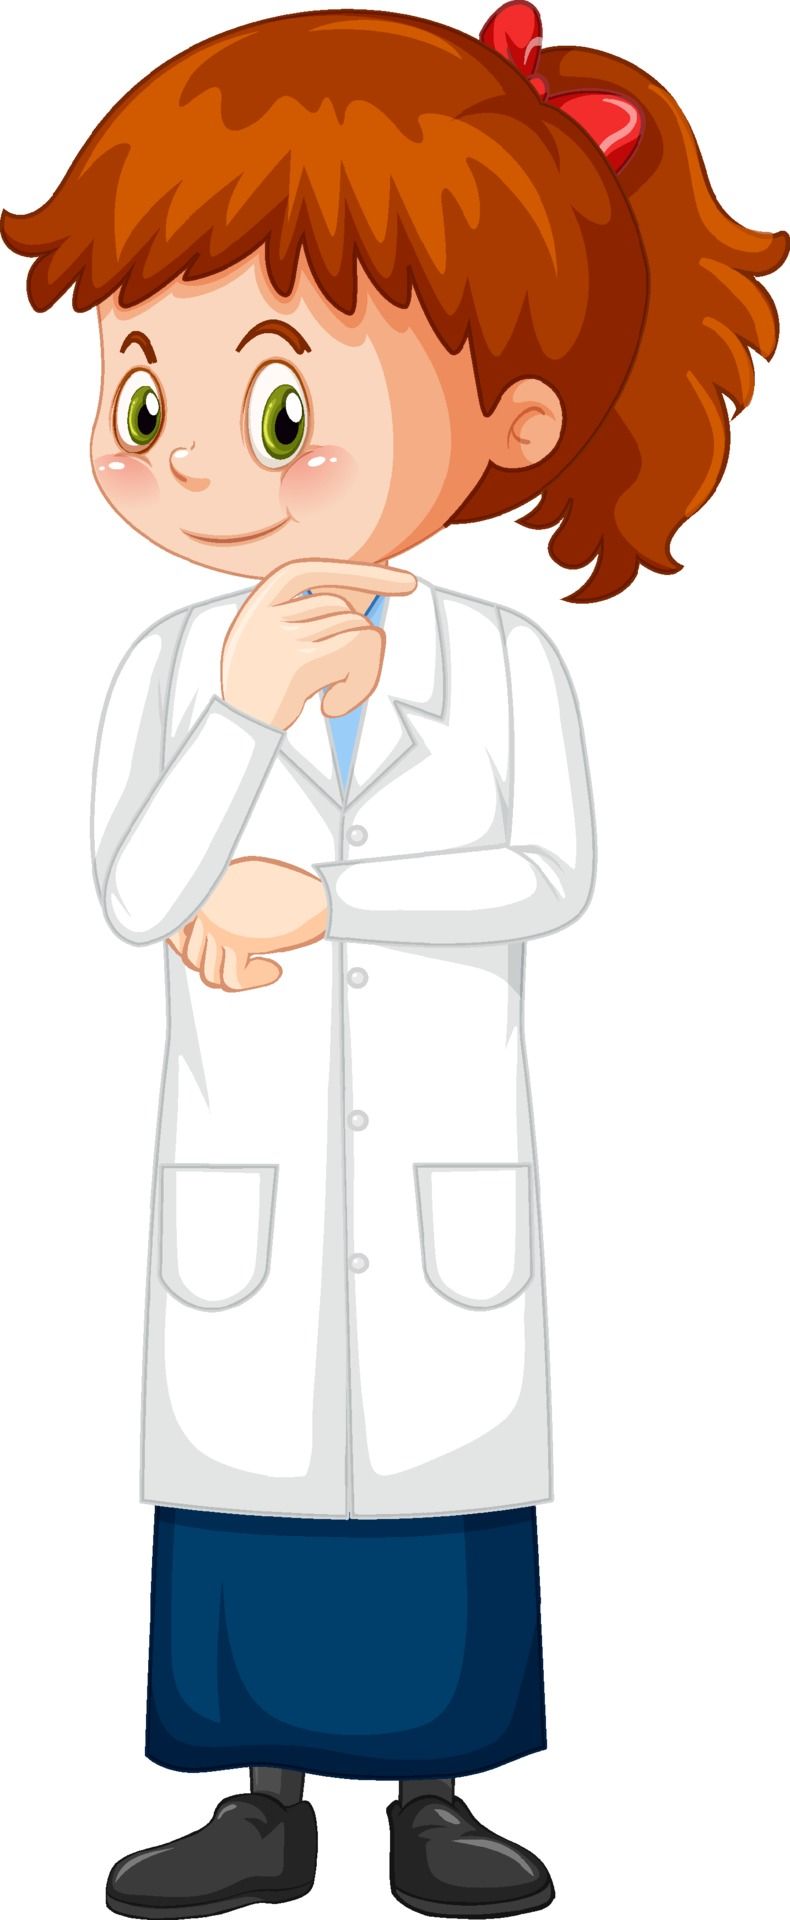 Cute girl cartoon character wearing science lab coat 2062783 Free Vectors, Clipart Graphics & Vector Art